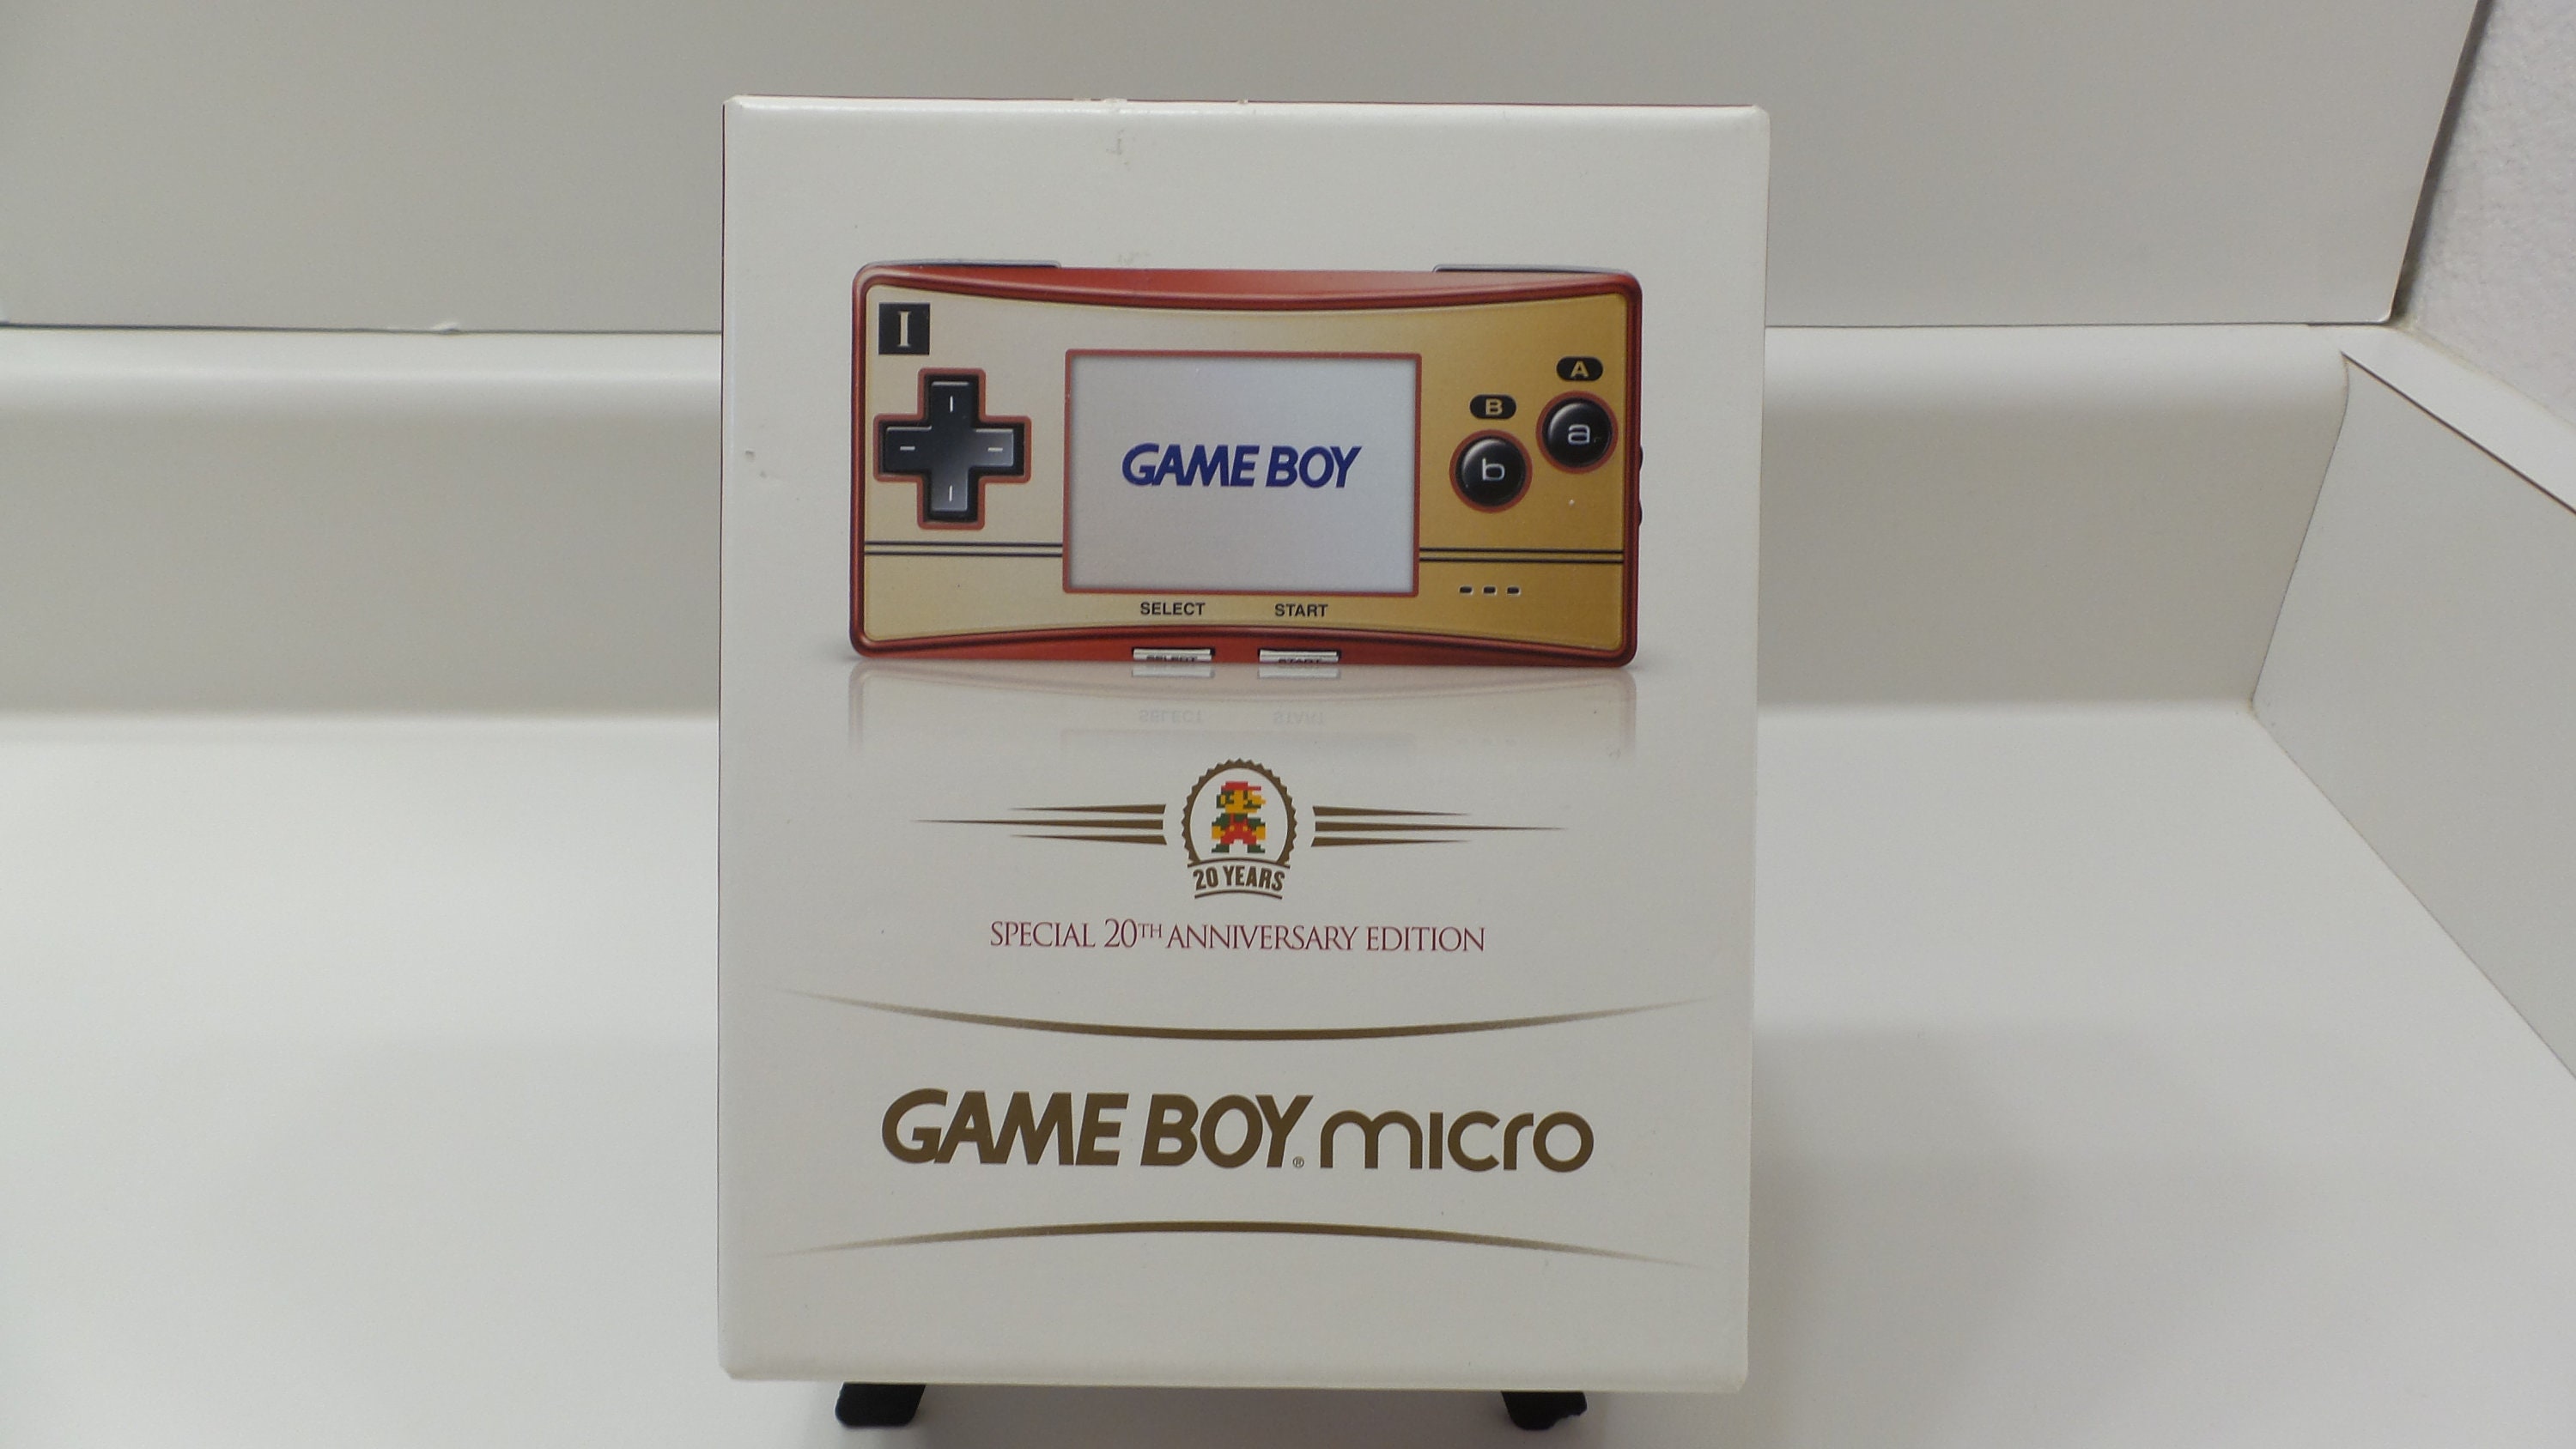 Svane fangst skarpt Brand New Sealed Game Boy Advance Micro Gold 20th Anniversary - Etsy